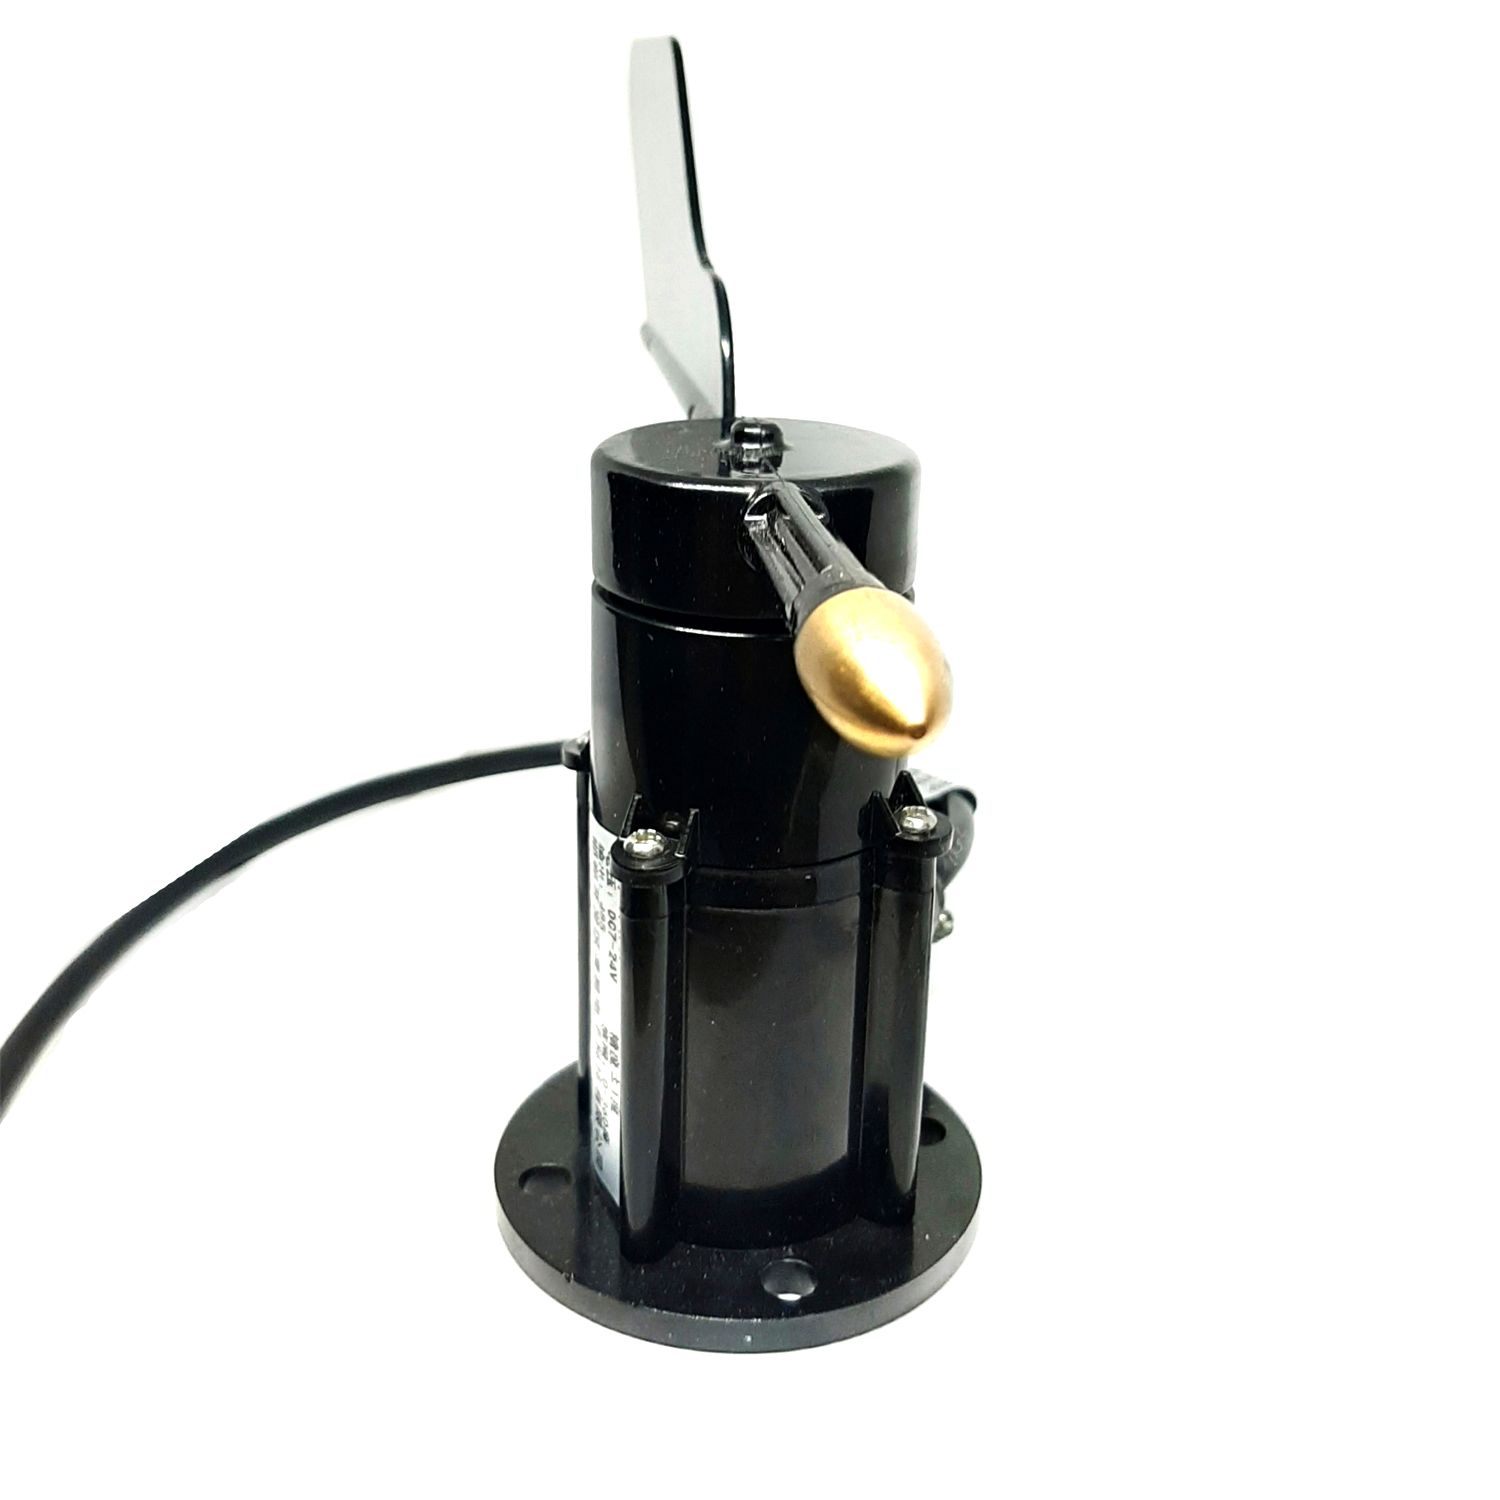 Комплект датчиков ветра анемометр, балансир интерфейс RS-485, протокол Modbus RTU (пластик)